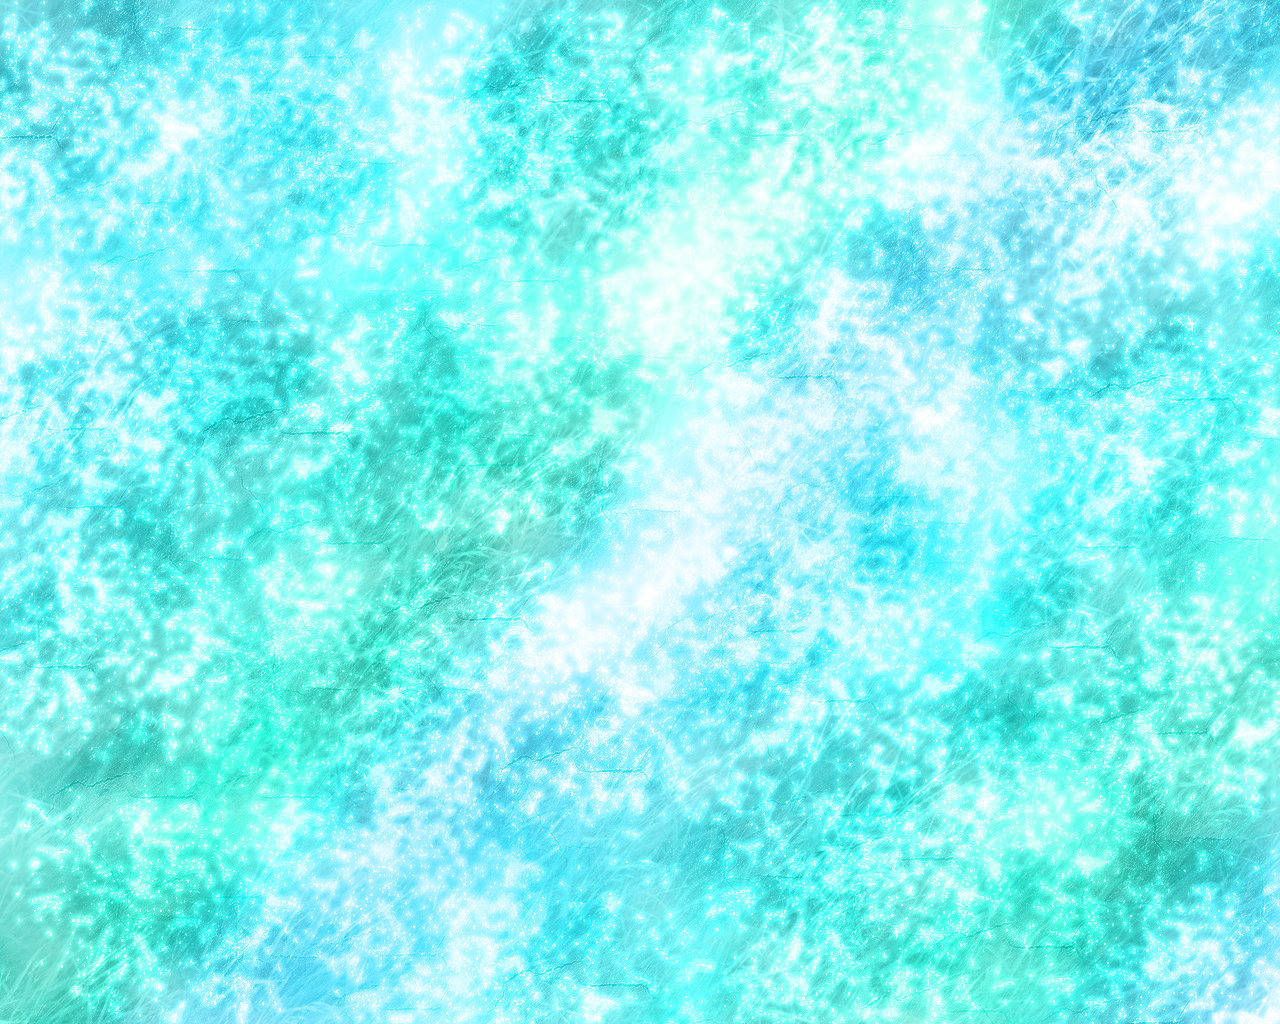 Sparkly Blue Wallpaper by Merieth